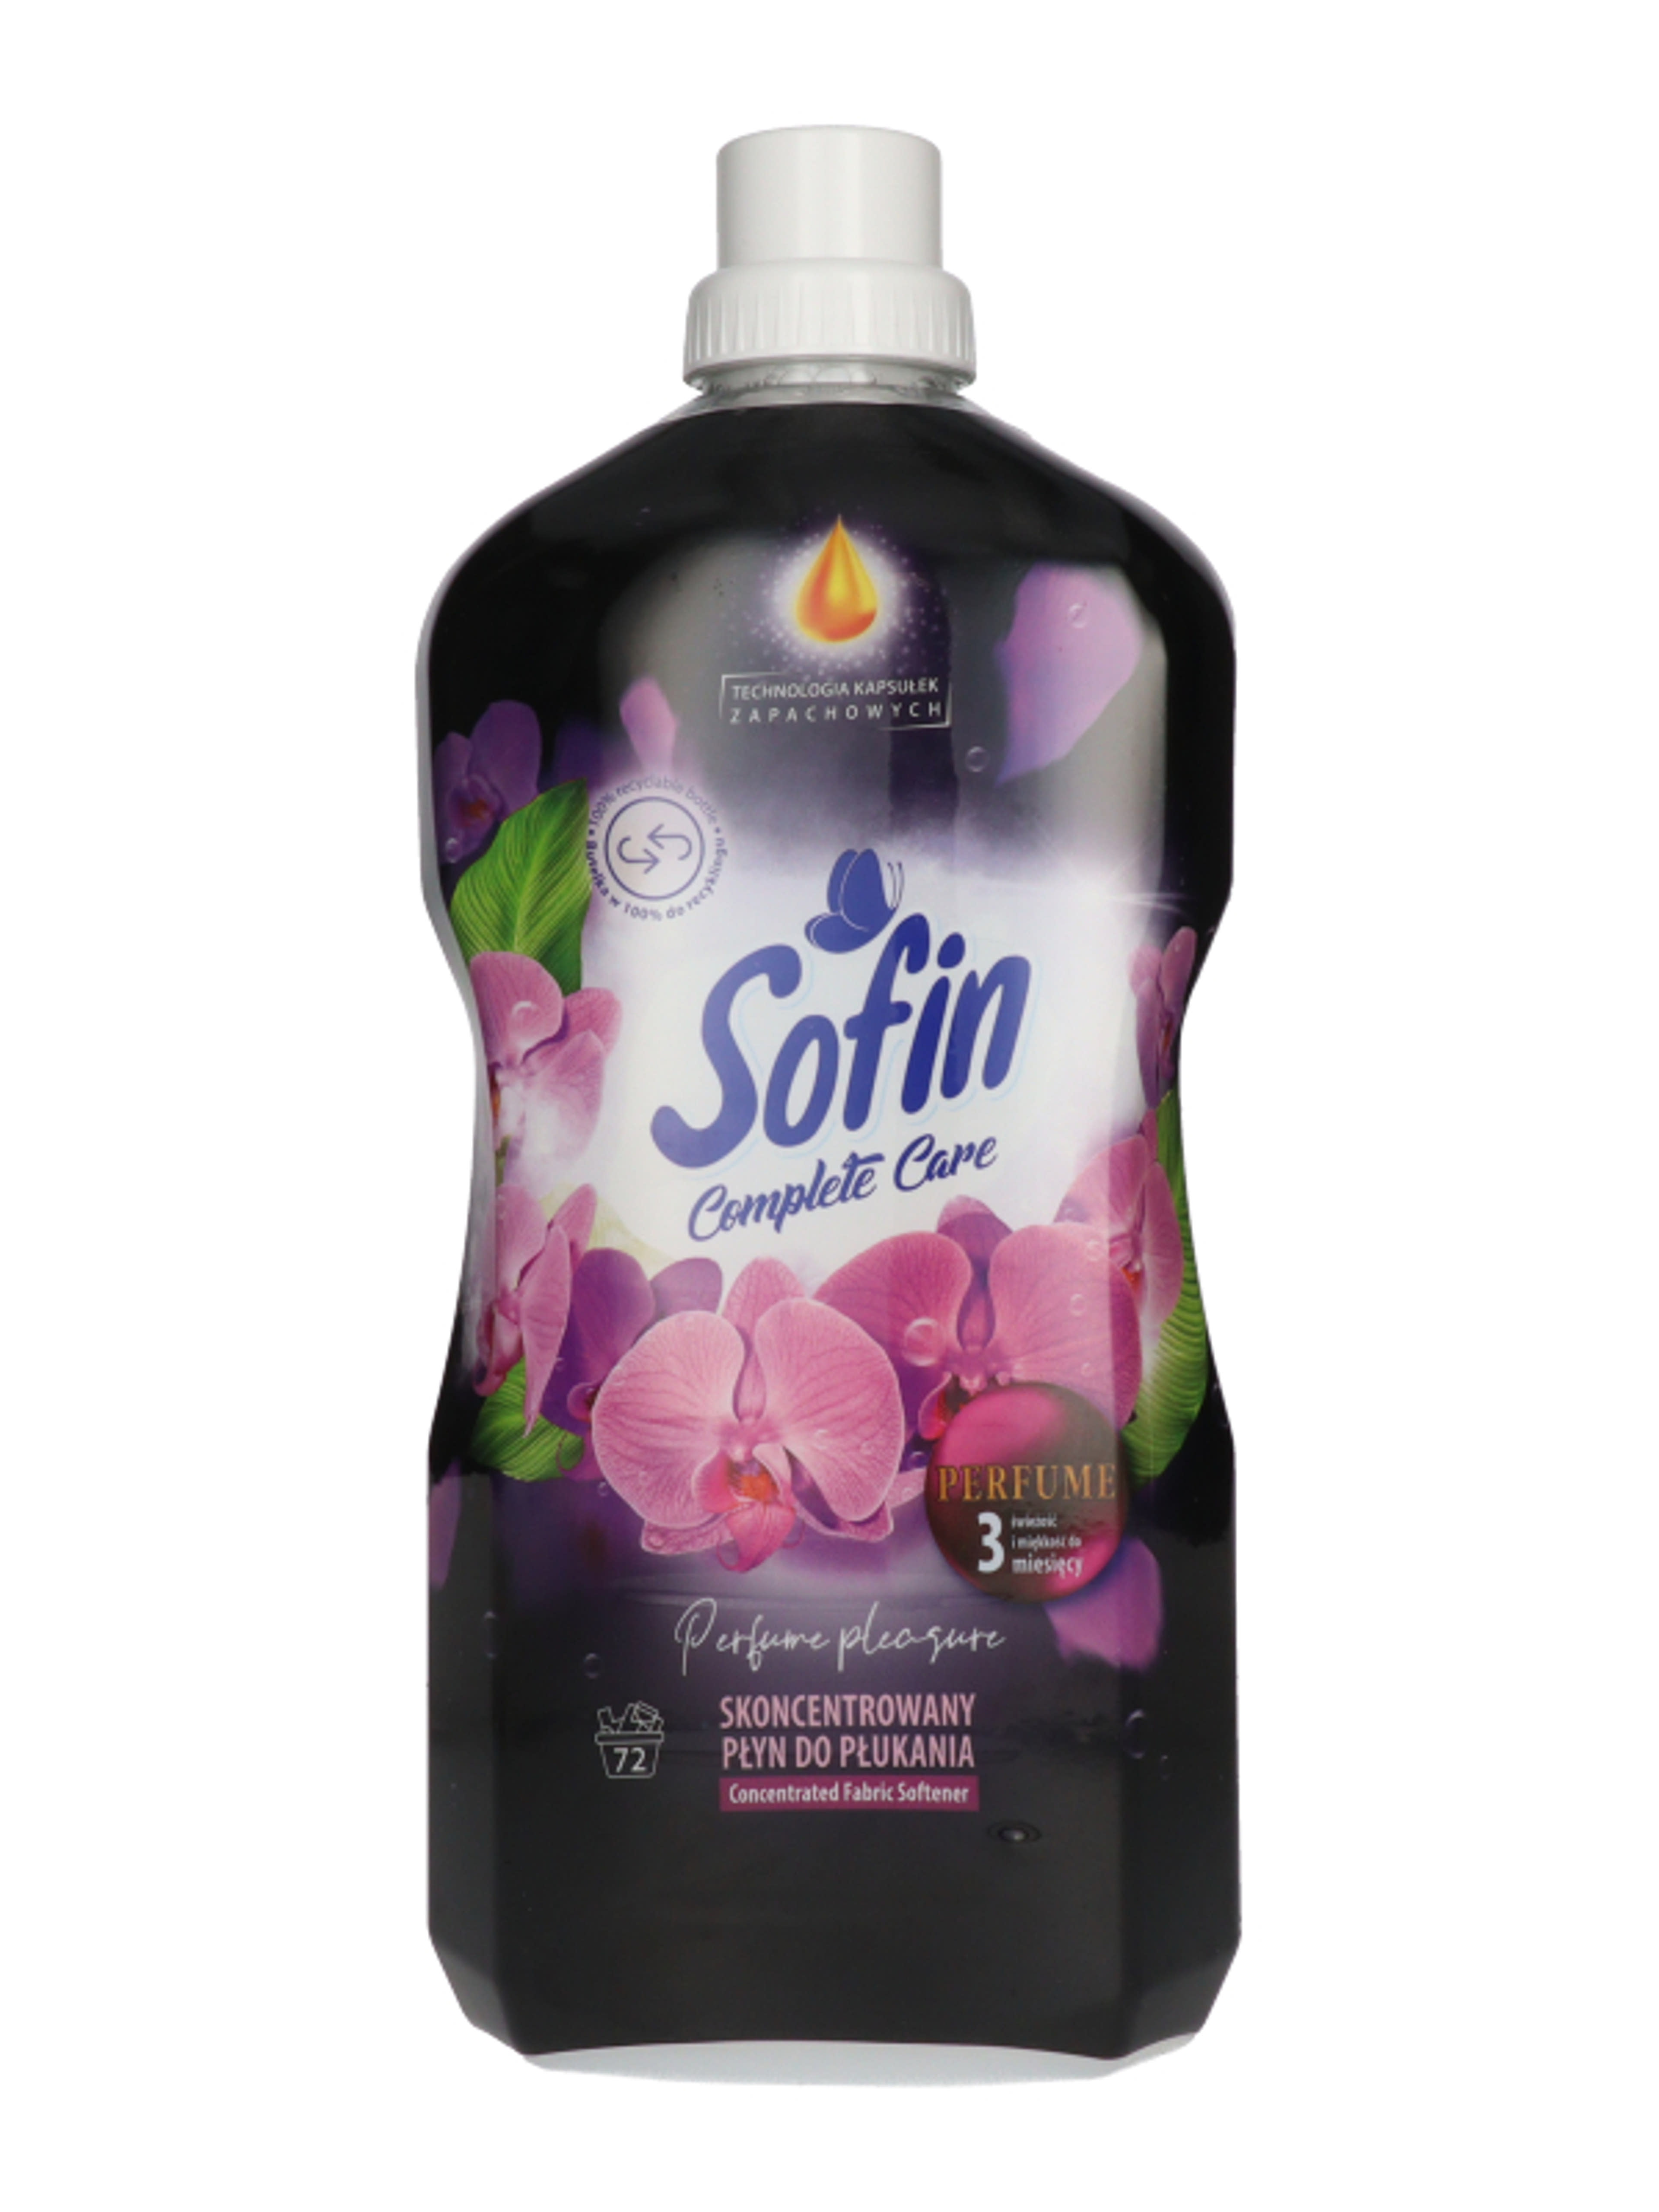 Sofin Complete Care&Perfume Pleasure öblítő - 1800 ml